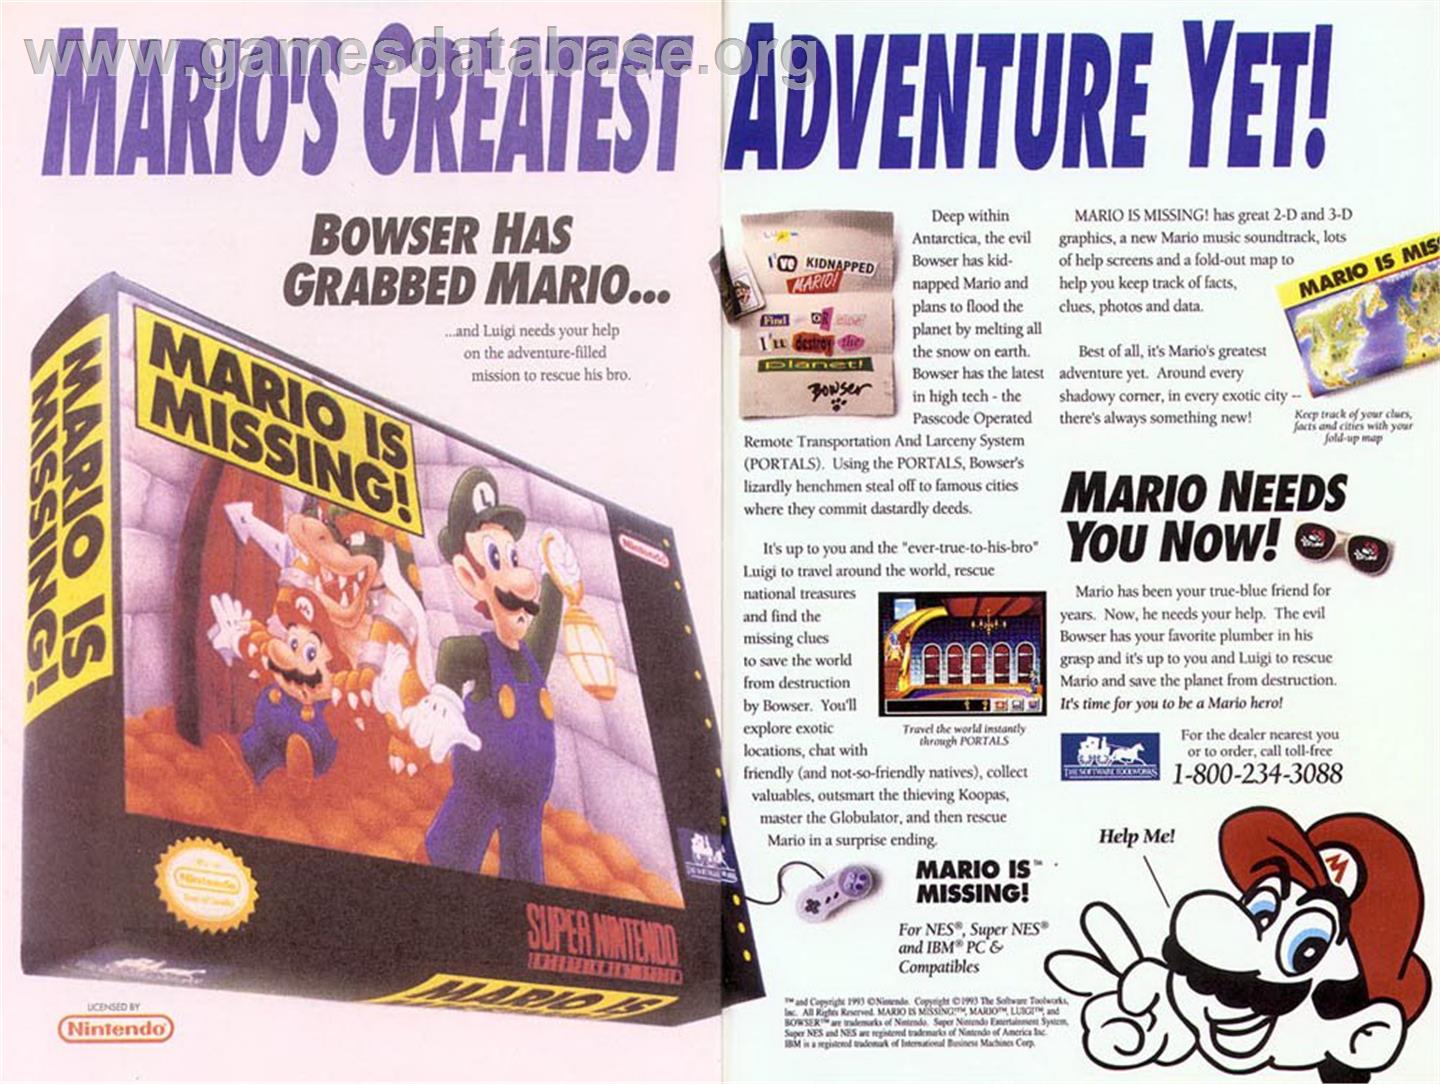 Mario is Missing! - Nintendo SNES - Artwork - Advert